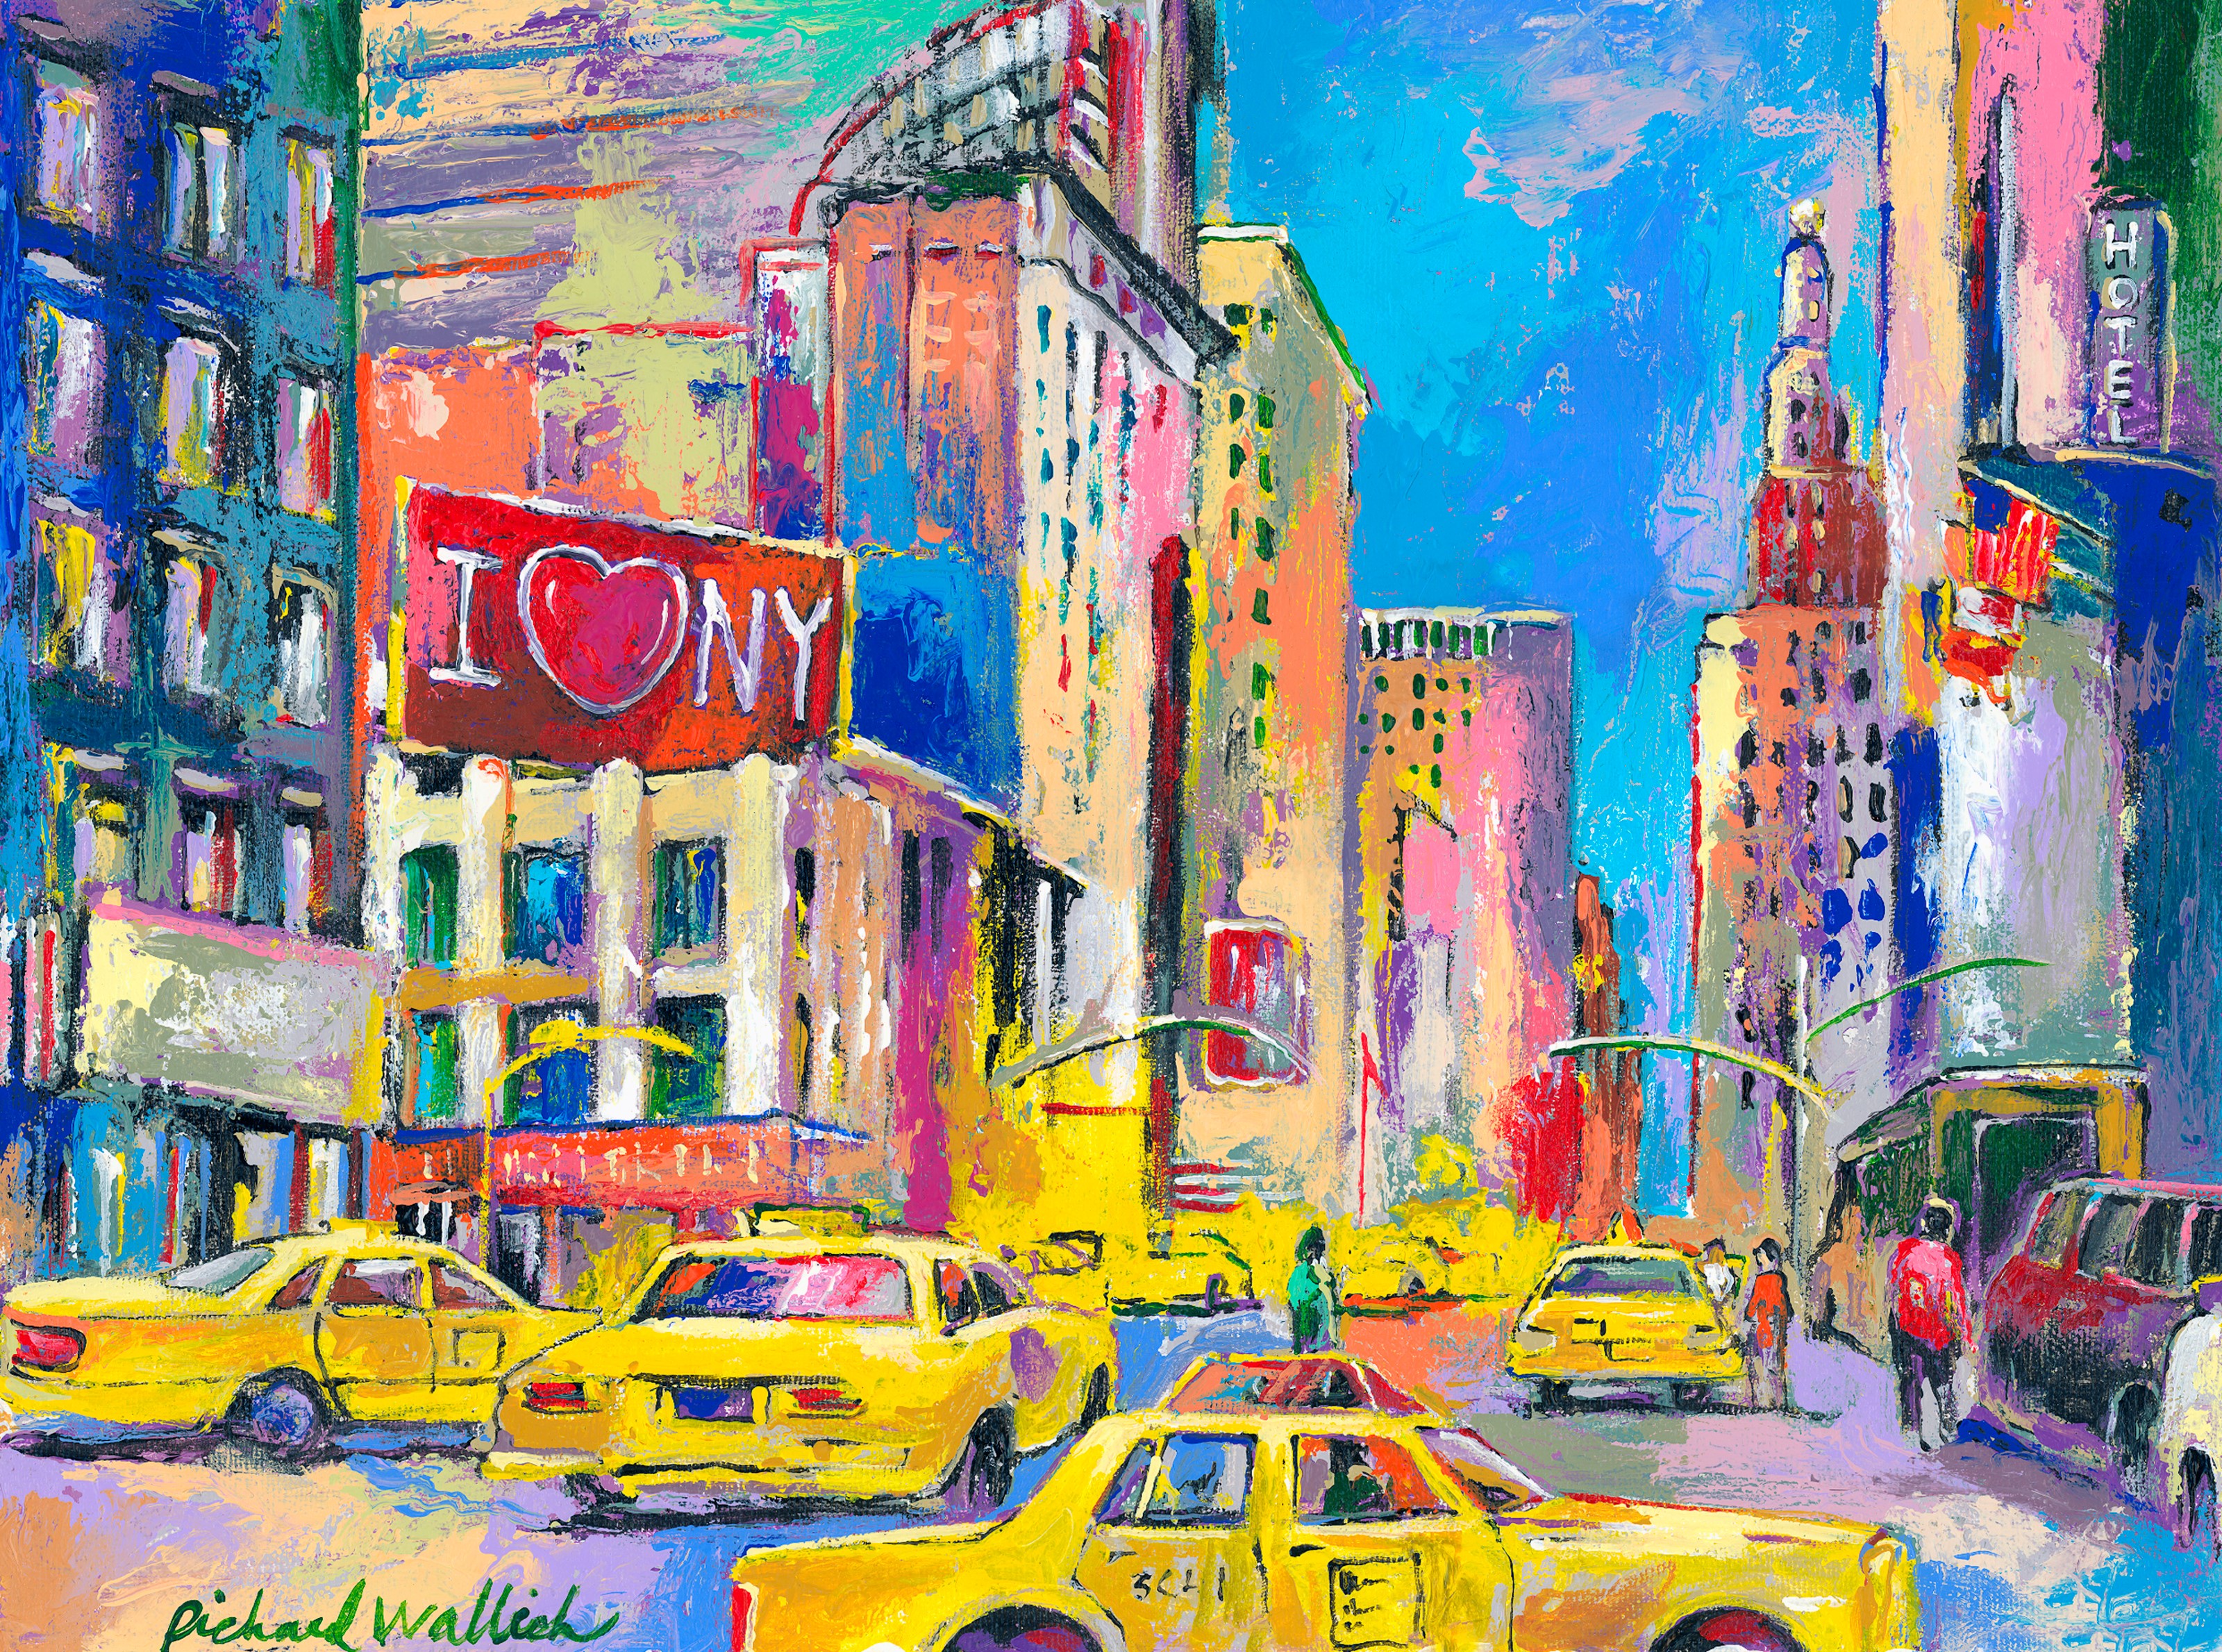 York New Your Way Taxi Wallpaper Mural Murals -